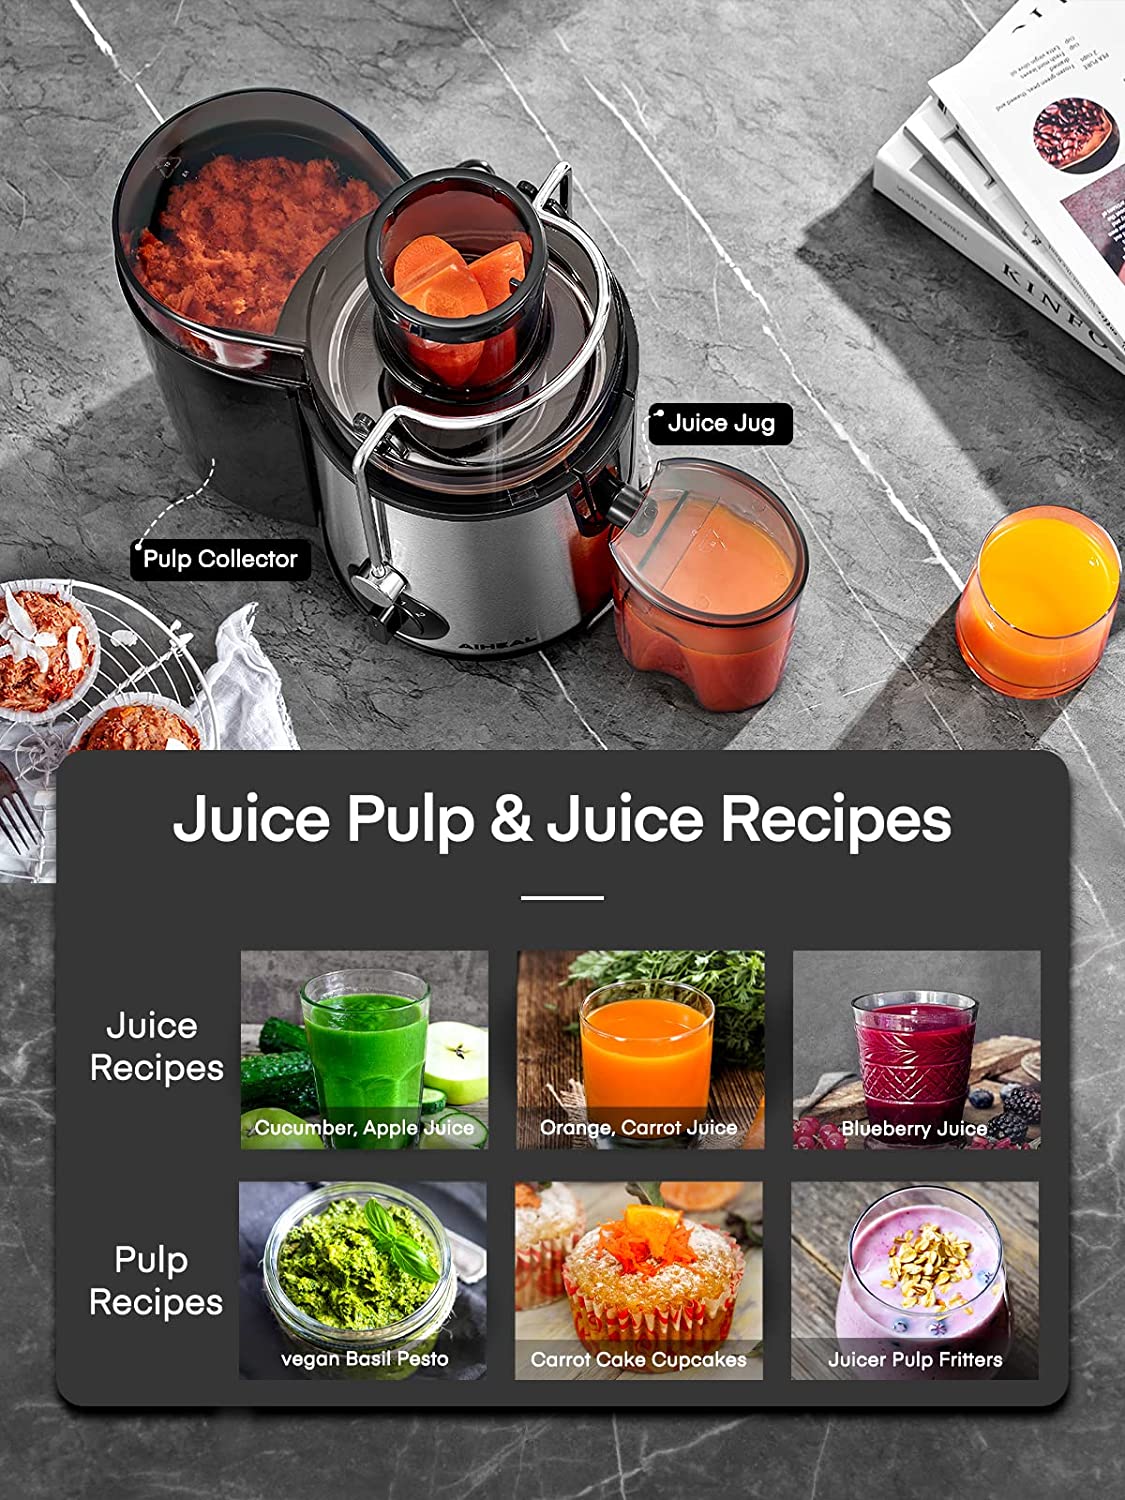 recipe included, brush, juice, juicer, centrifugal juicer, aiheal